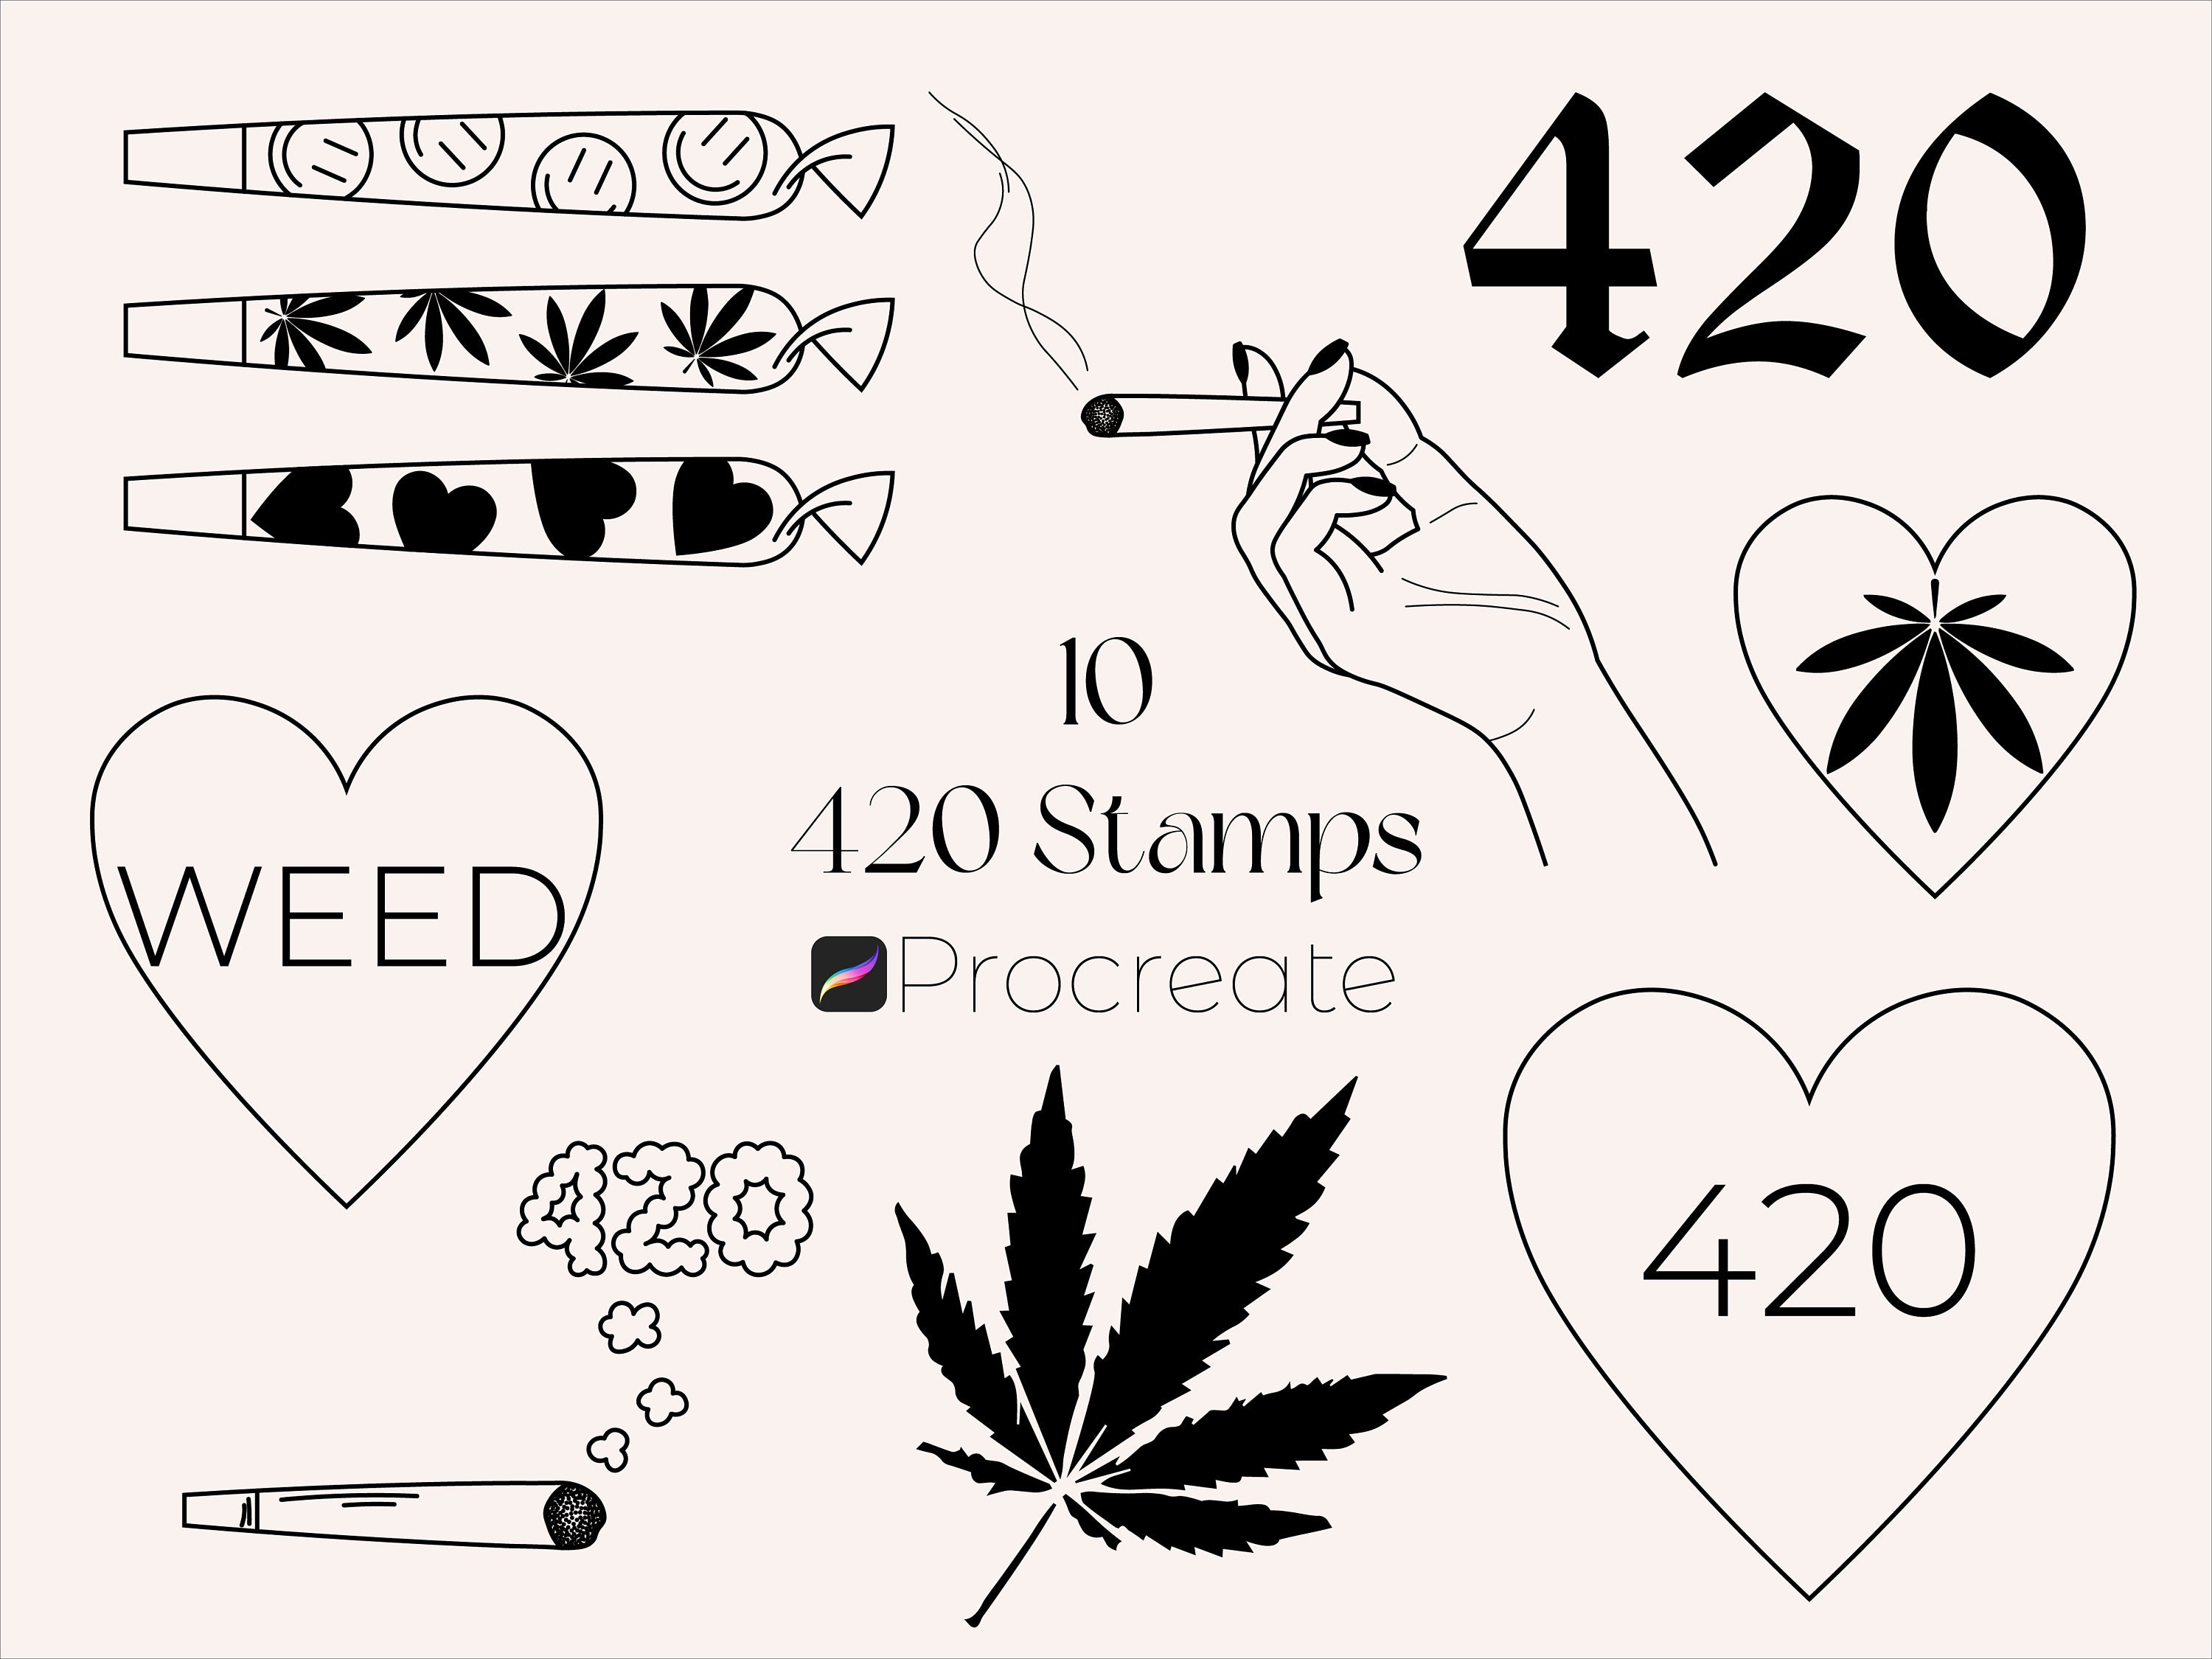 Stoner 420 tattoo designs